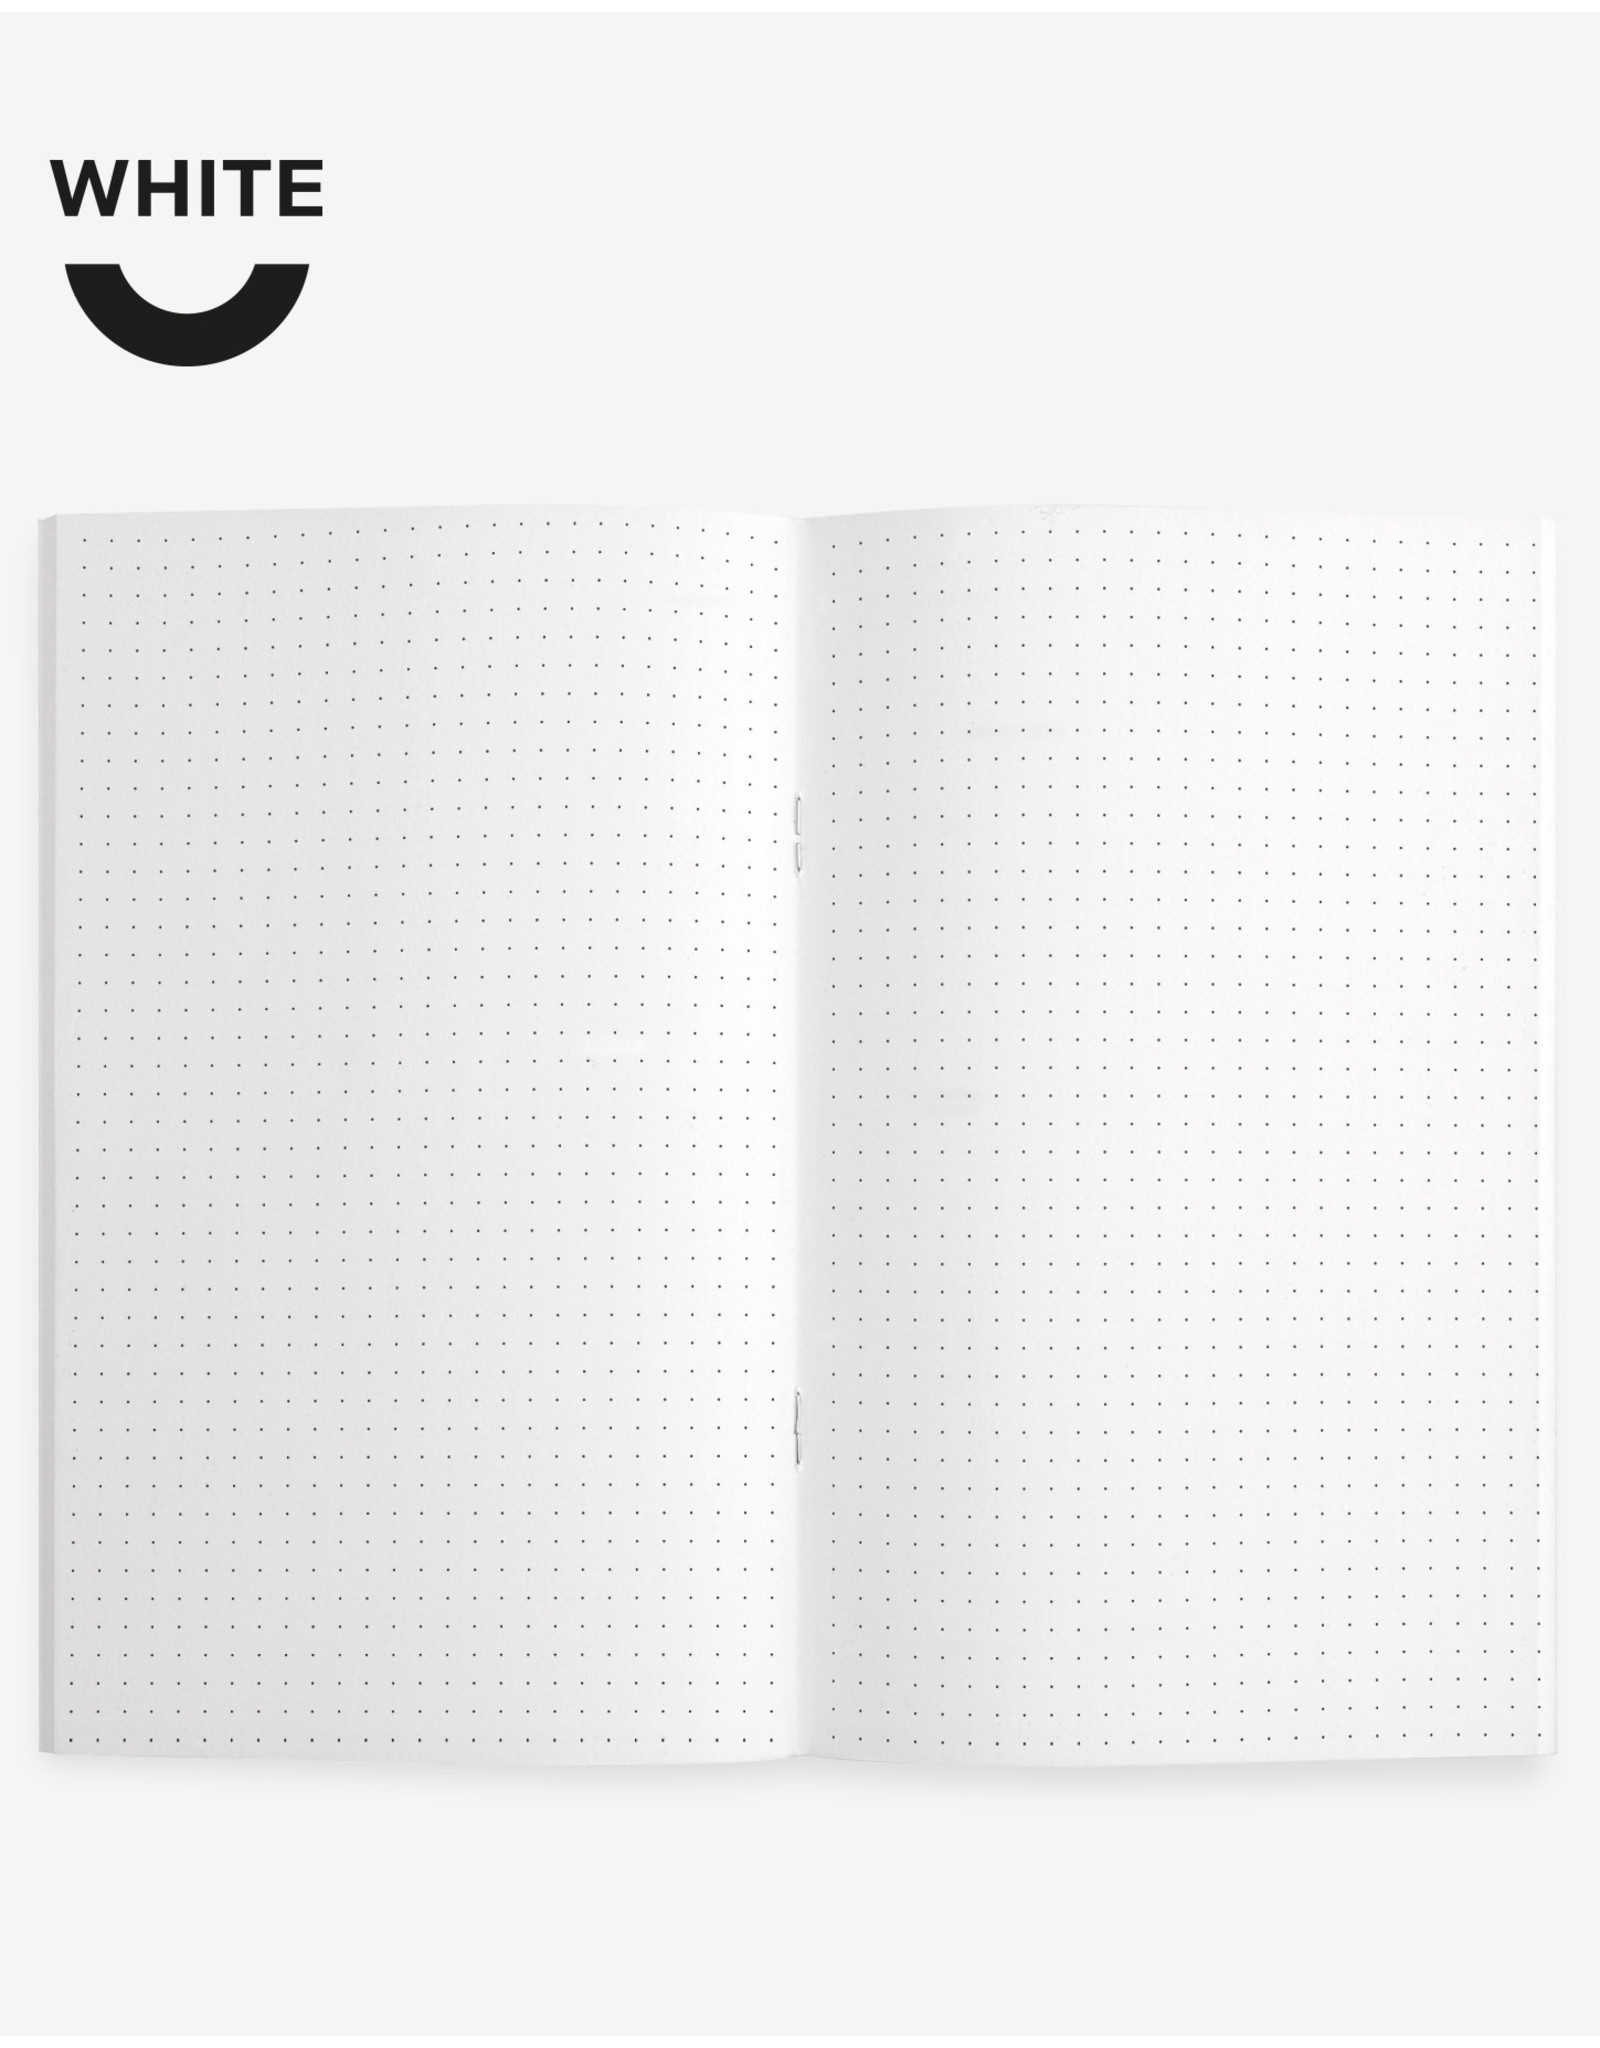 Modimo Bullet journal Beige - My plan - White - 13 x 21 cm - Flexible regenerated leather